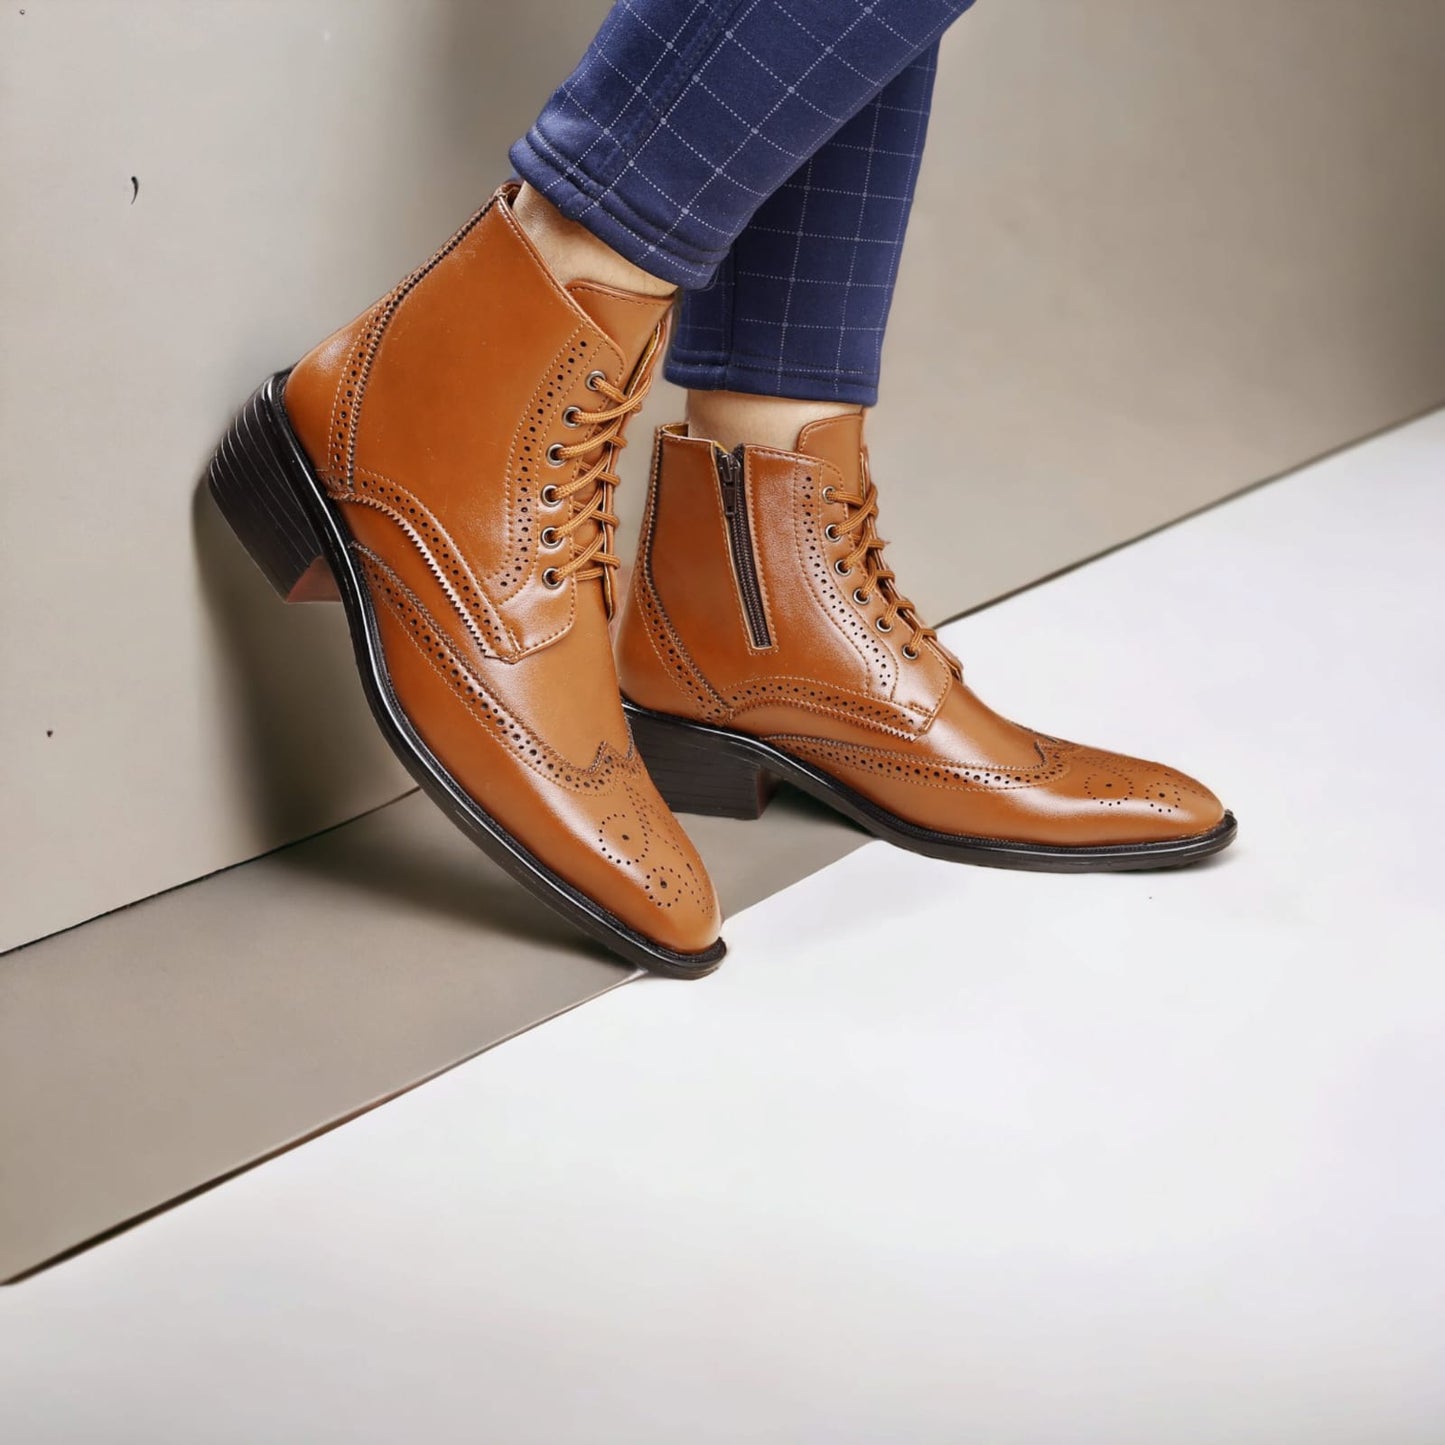 Jack Marc Brogue Tan Leather Height Increasing Boots Men - JACKMARC.COM